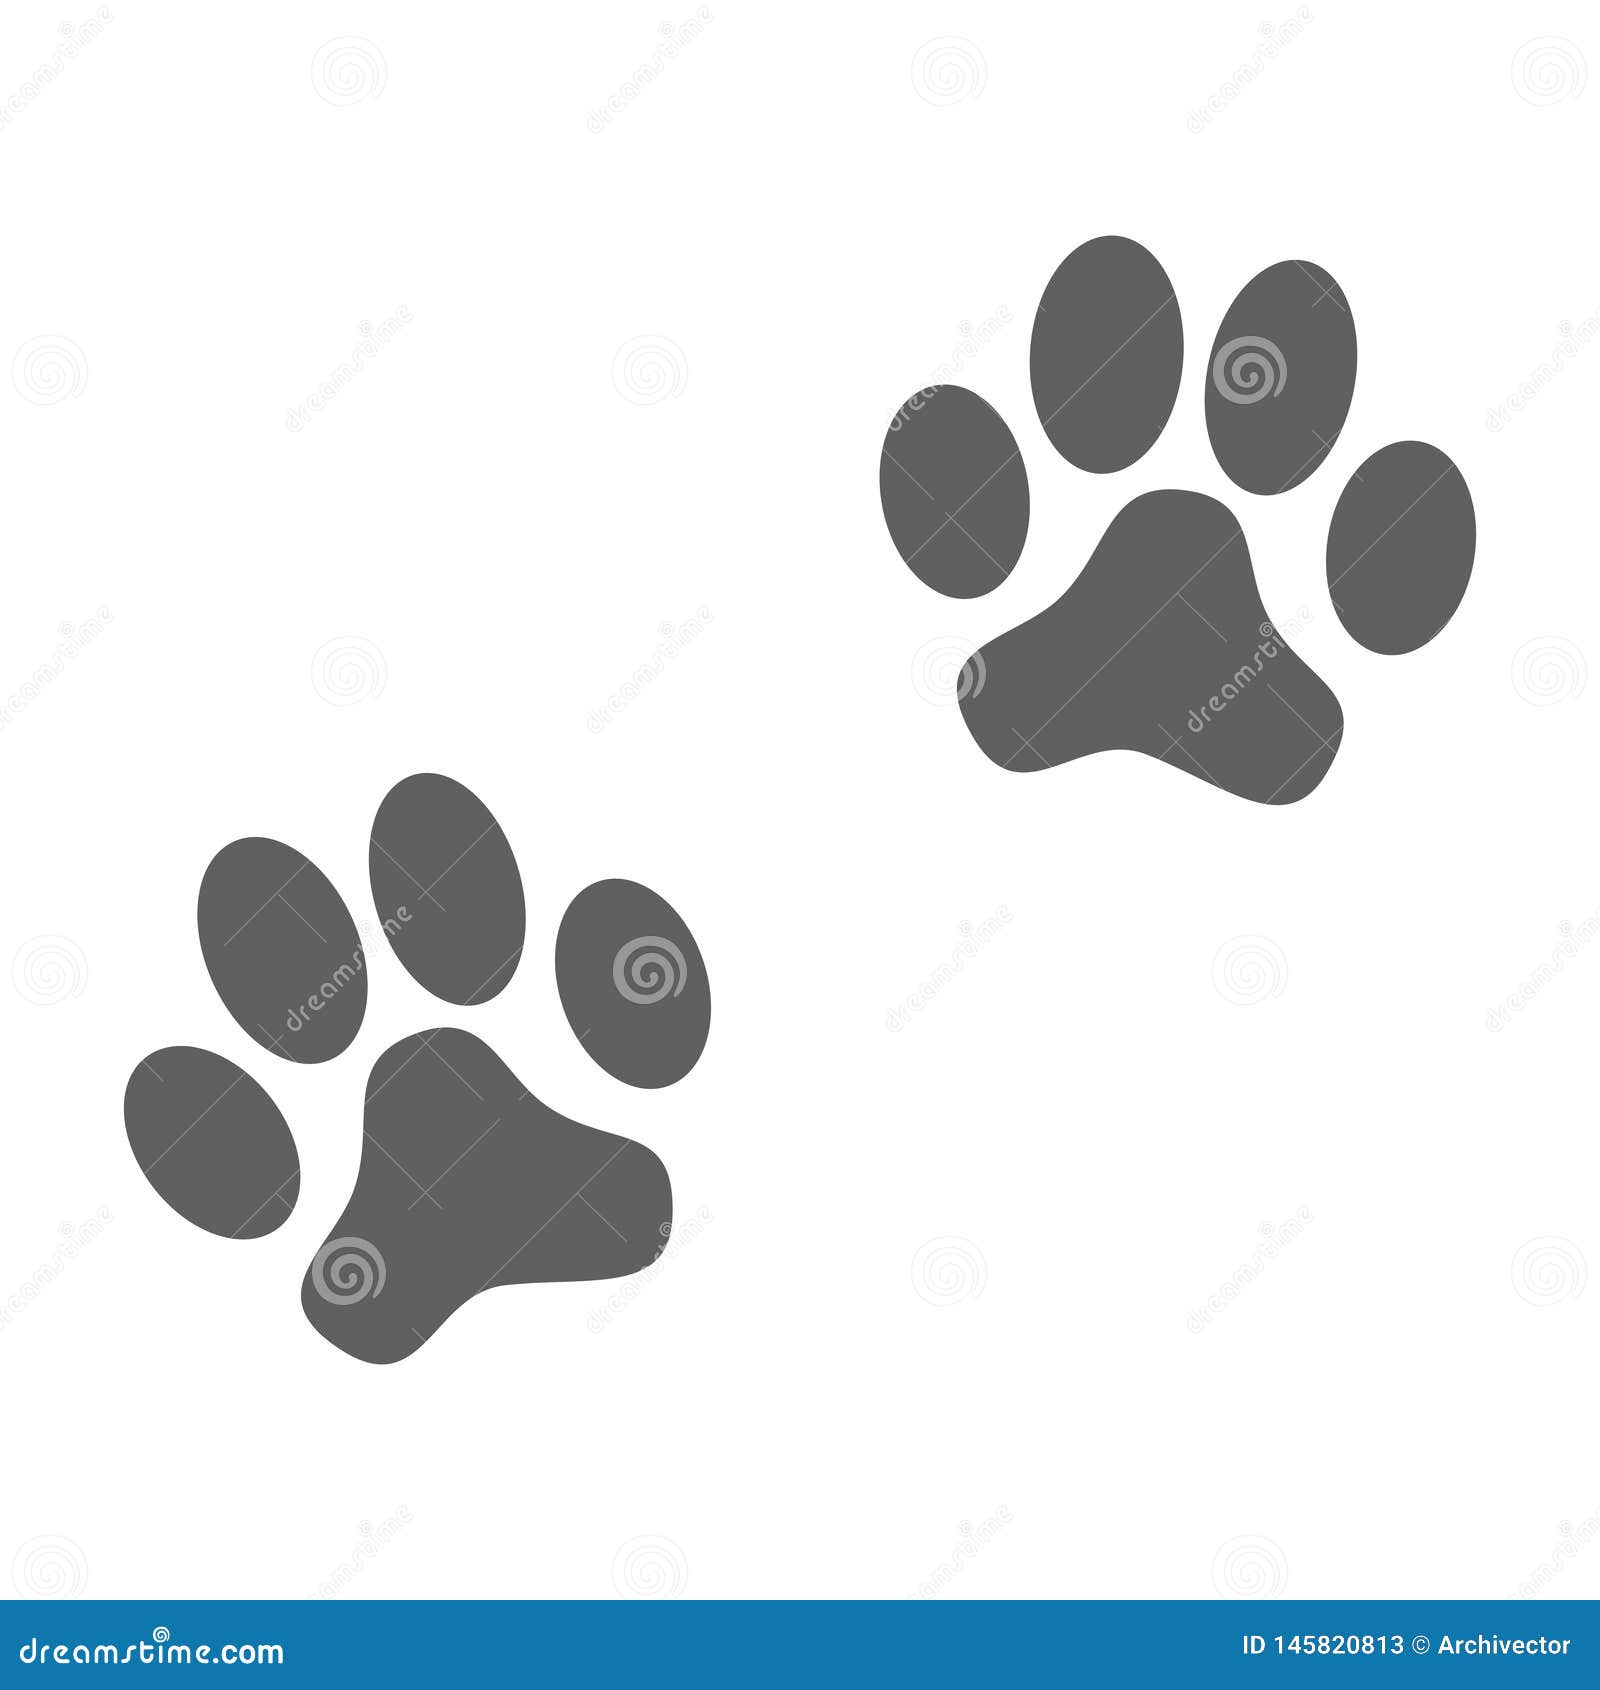 paws animal prints graphic sign